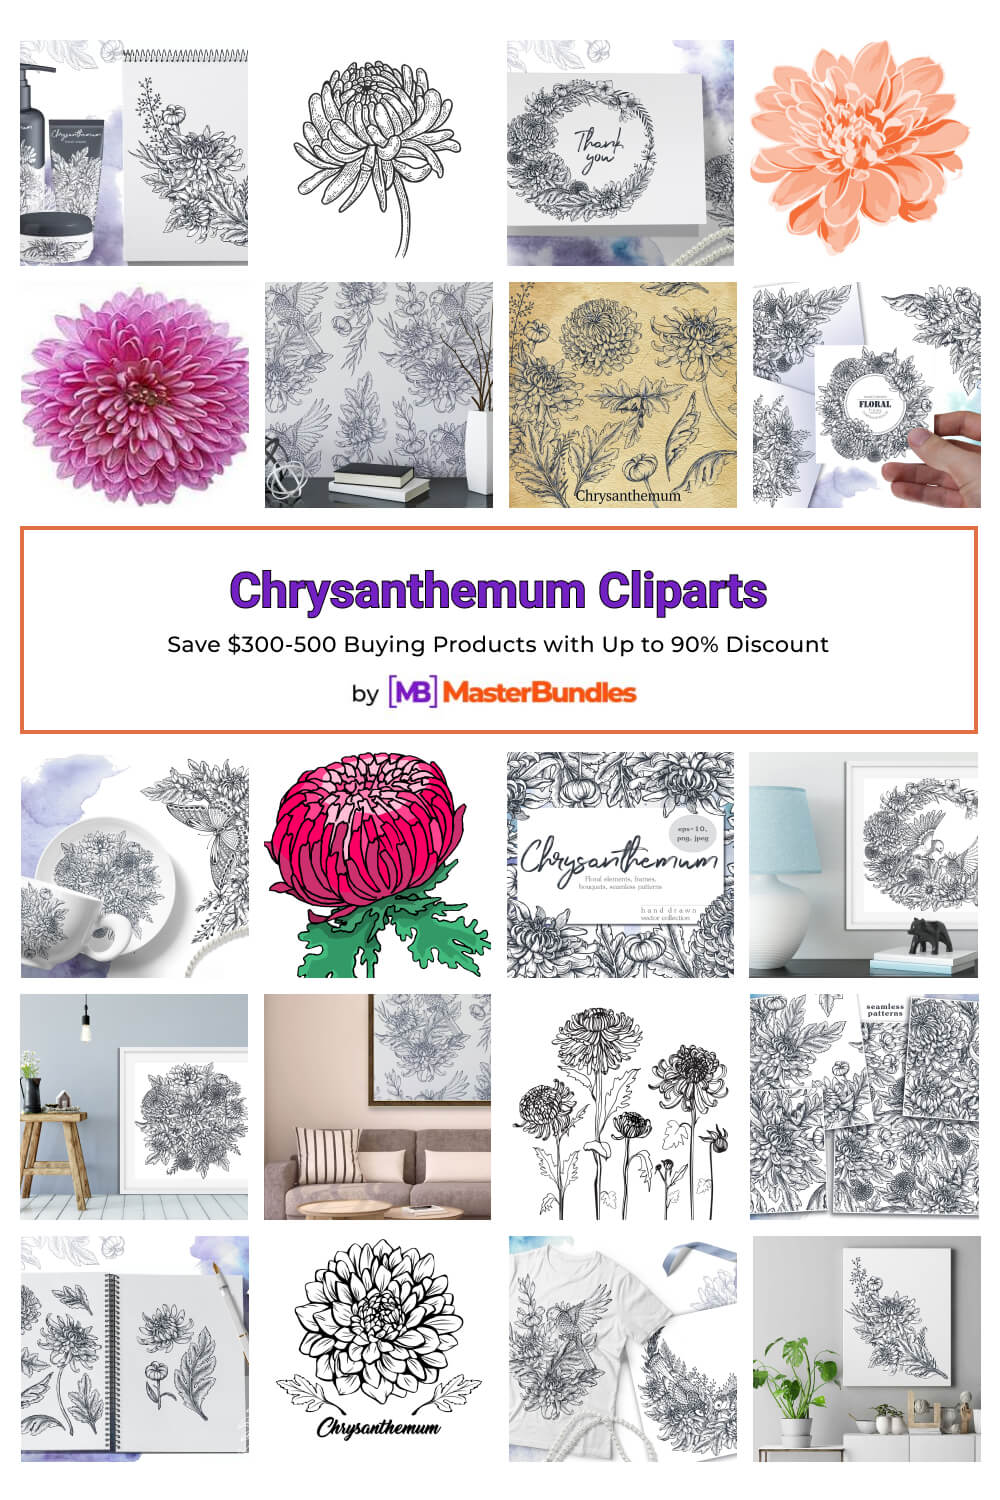 chrysanthemum cliparts pinterest image.